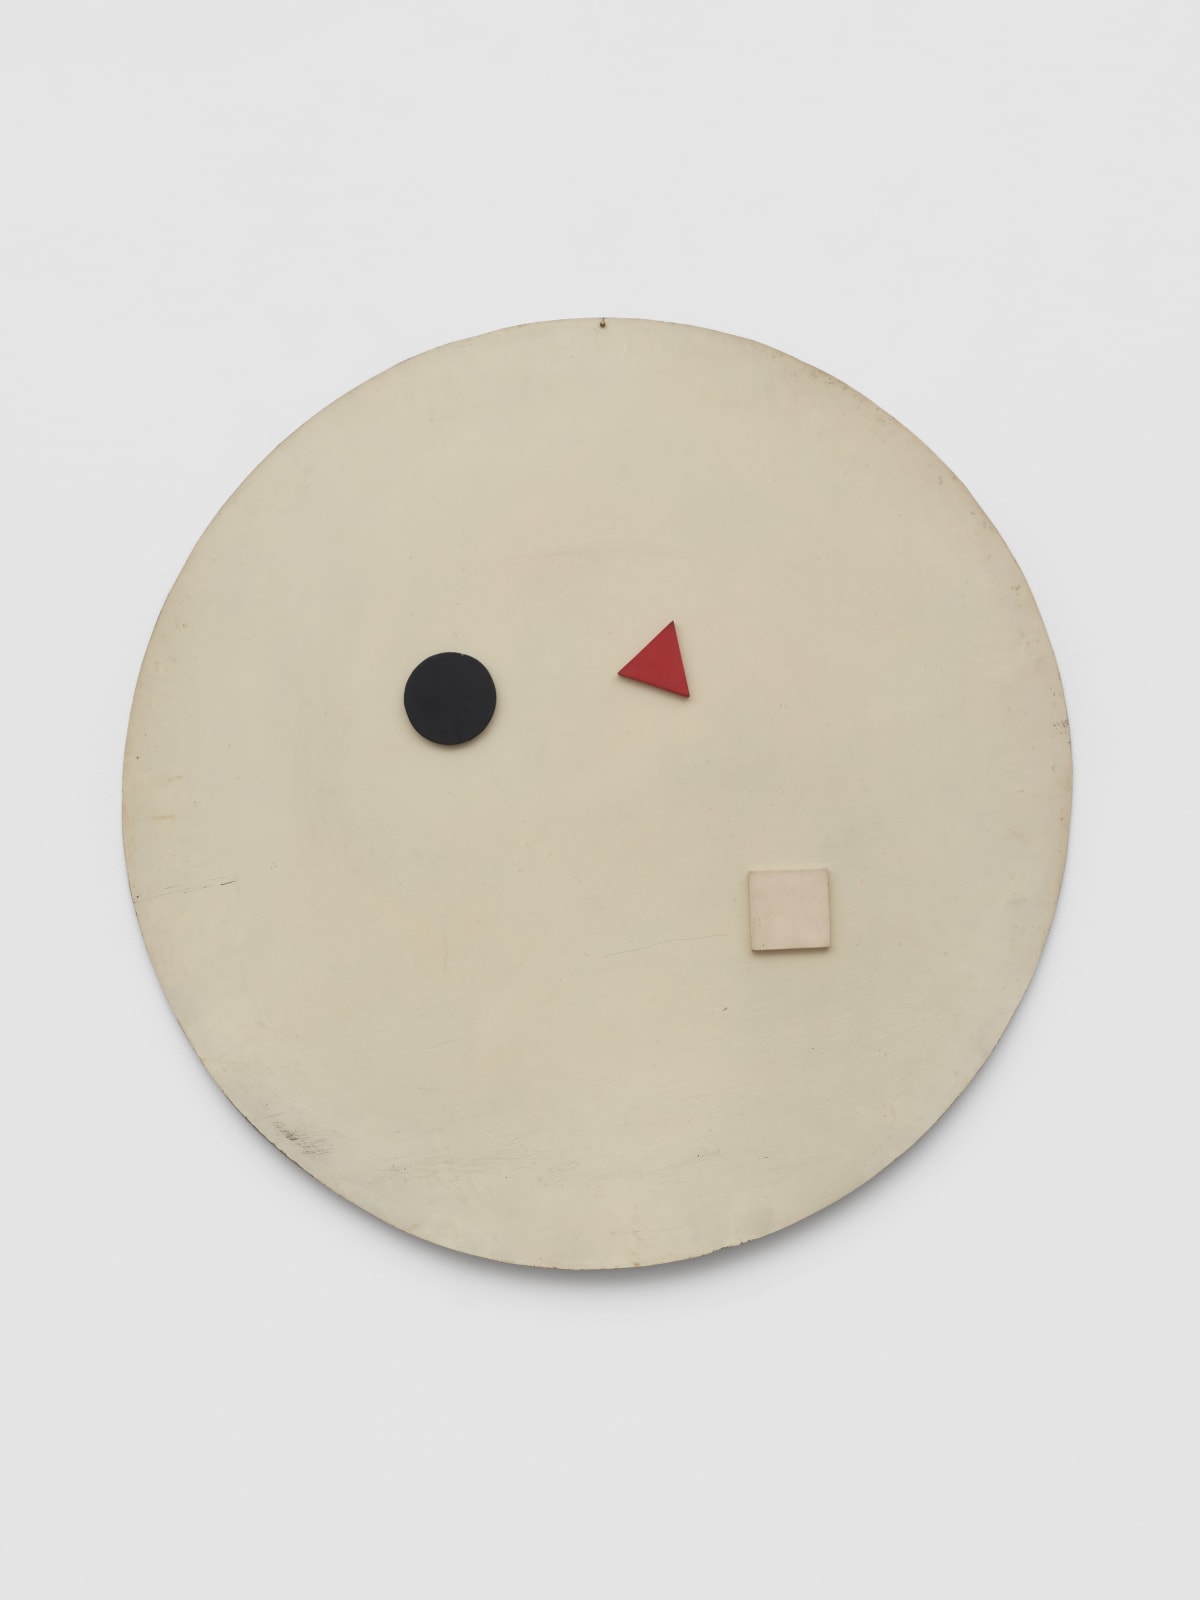 Li Yuan-Chia, Hanging Disk, 1960s